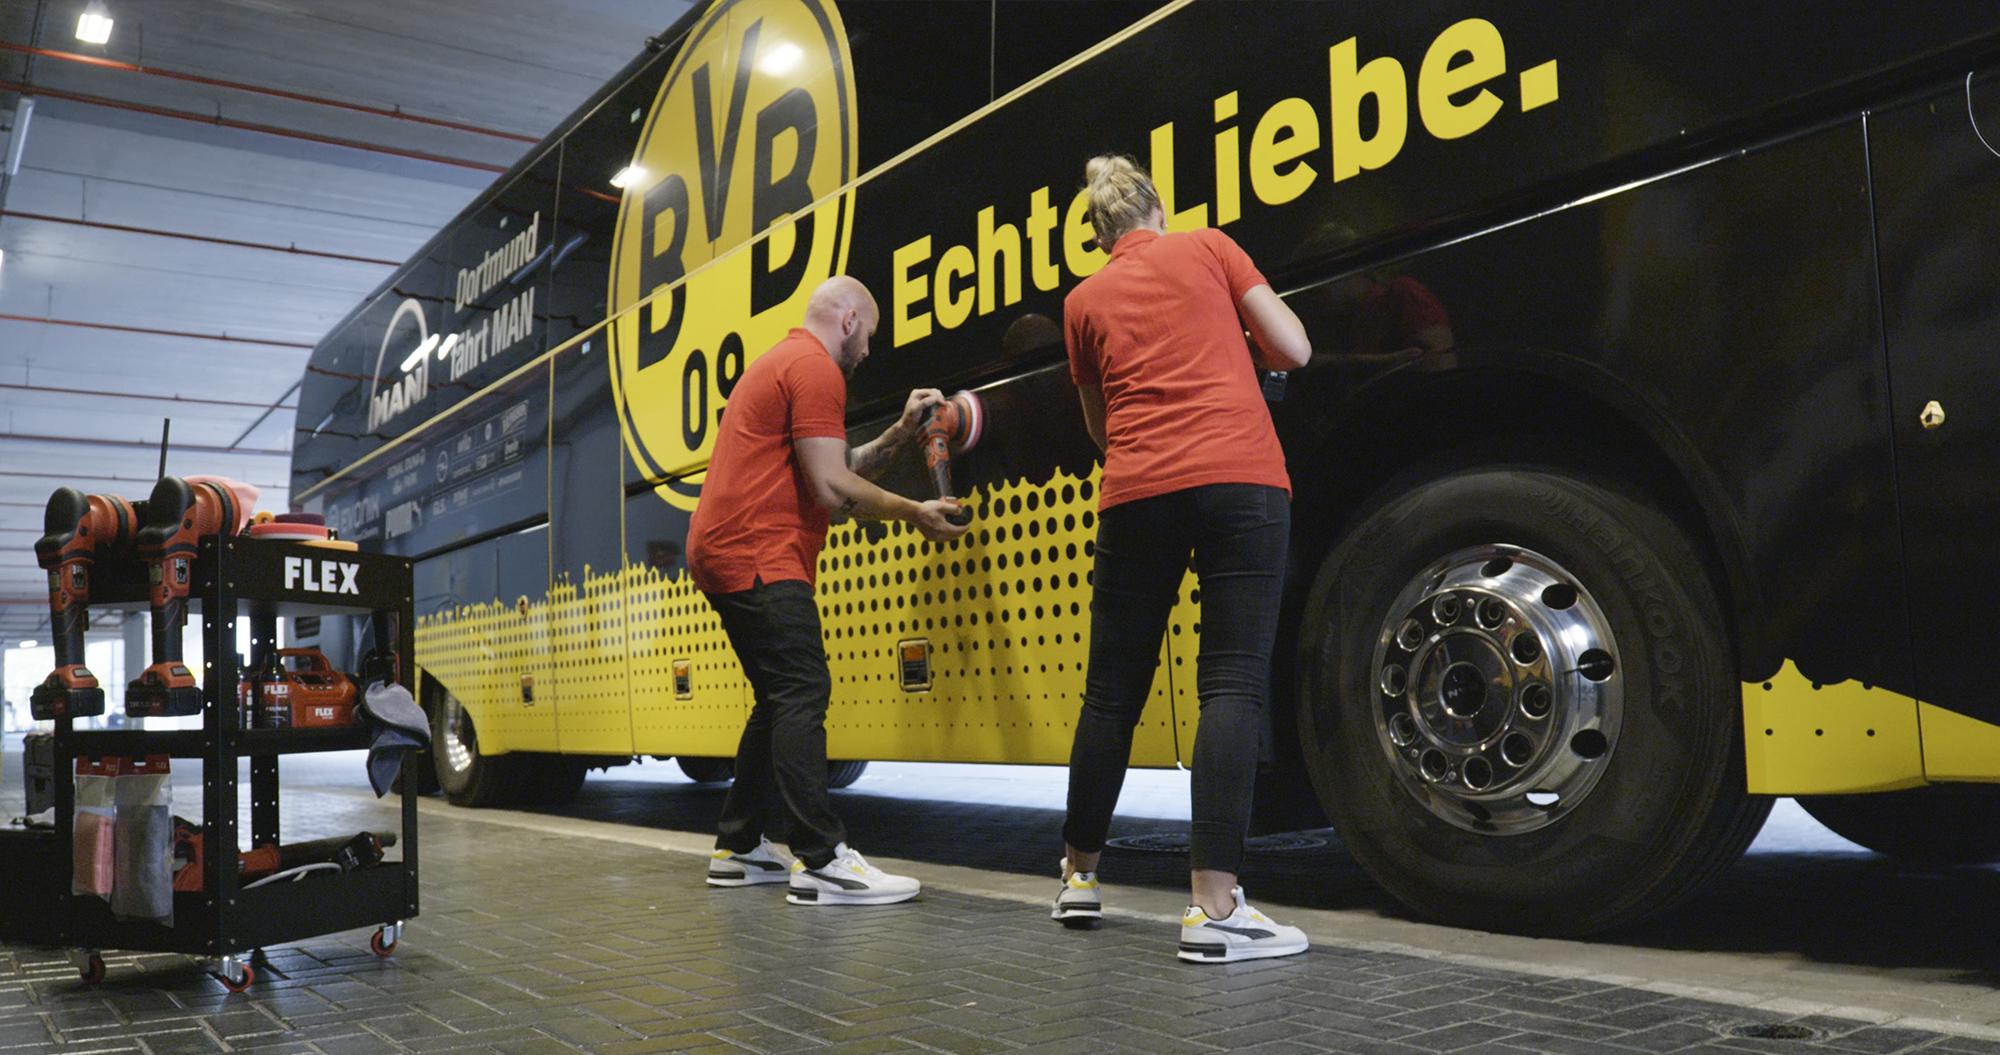 BVB Bus polishing with FLEX